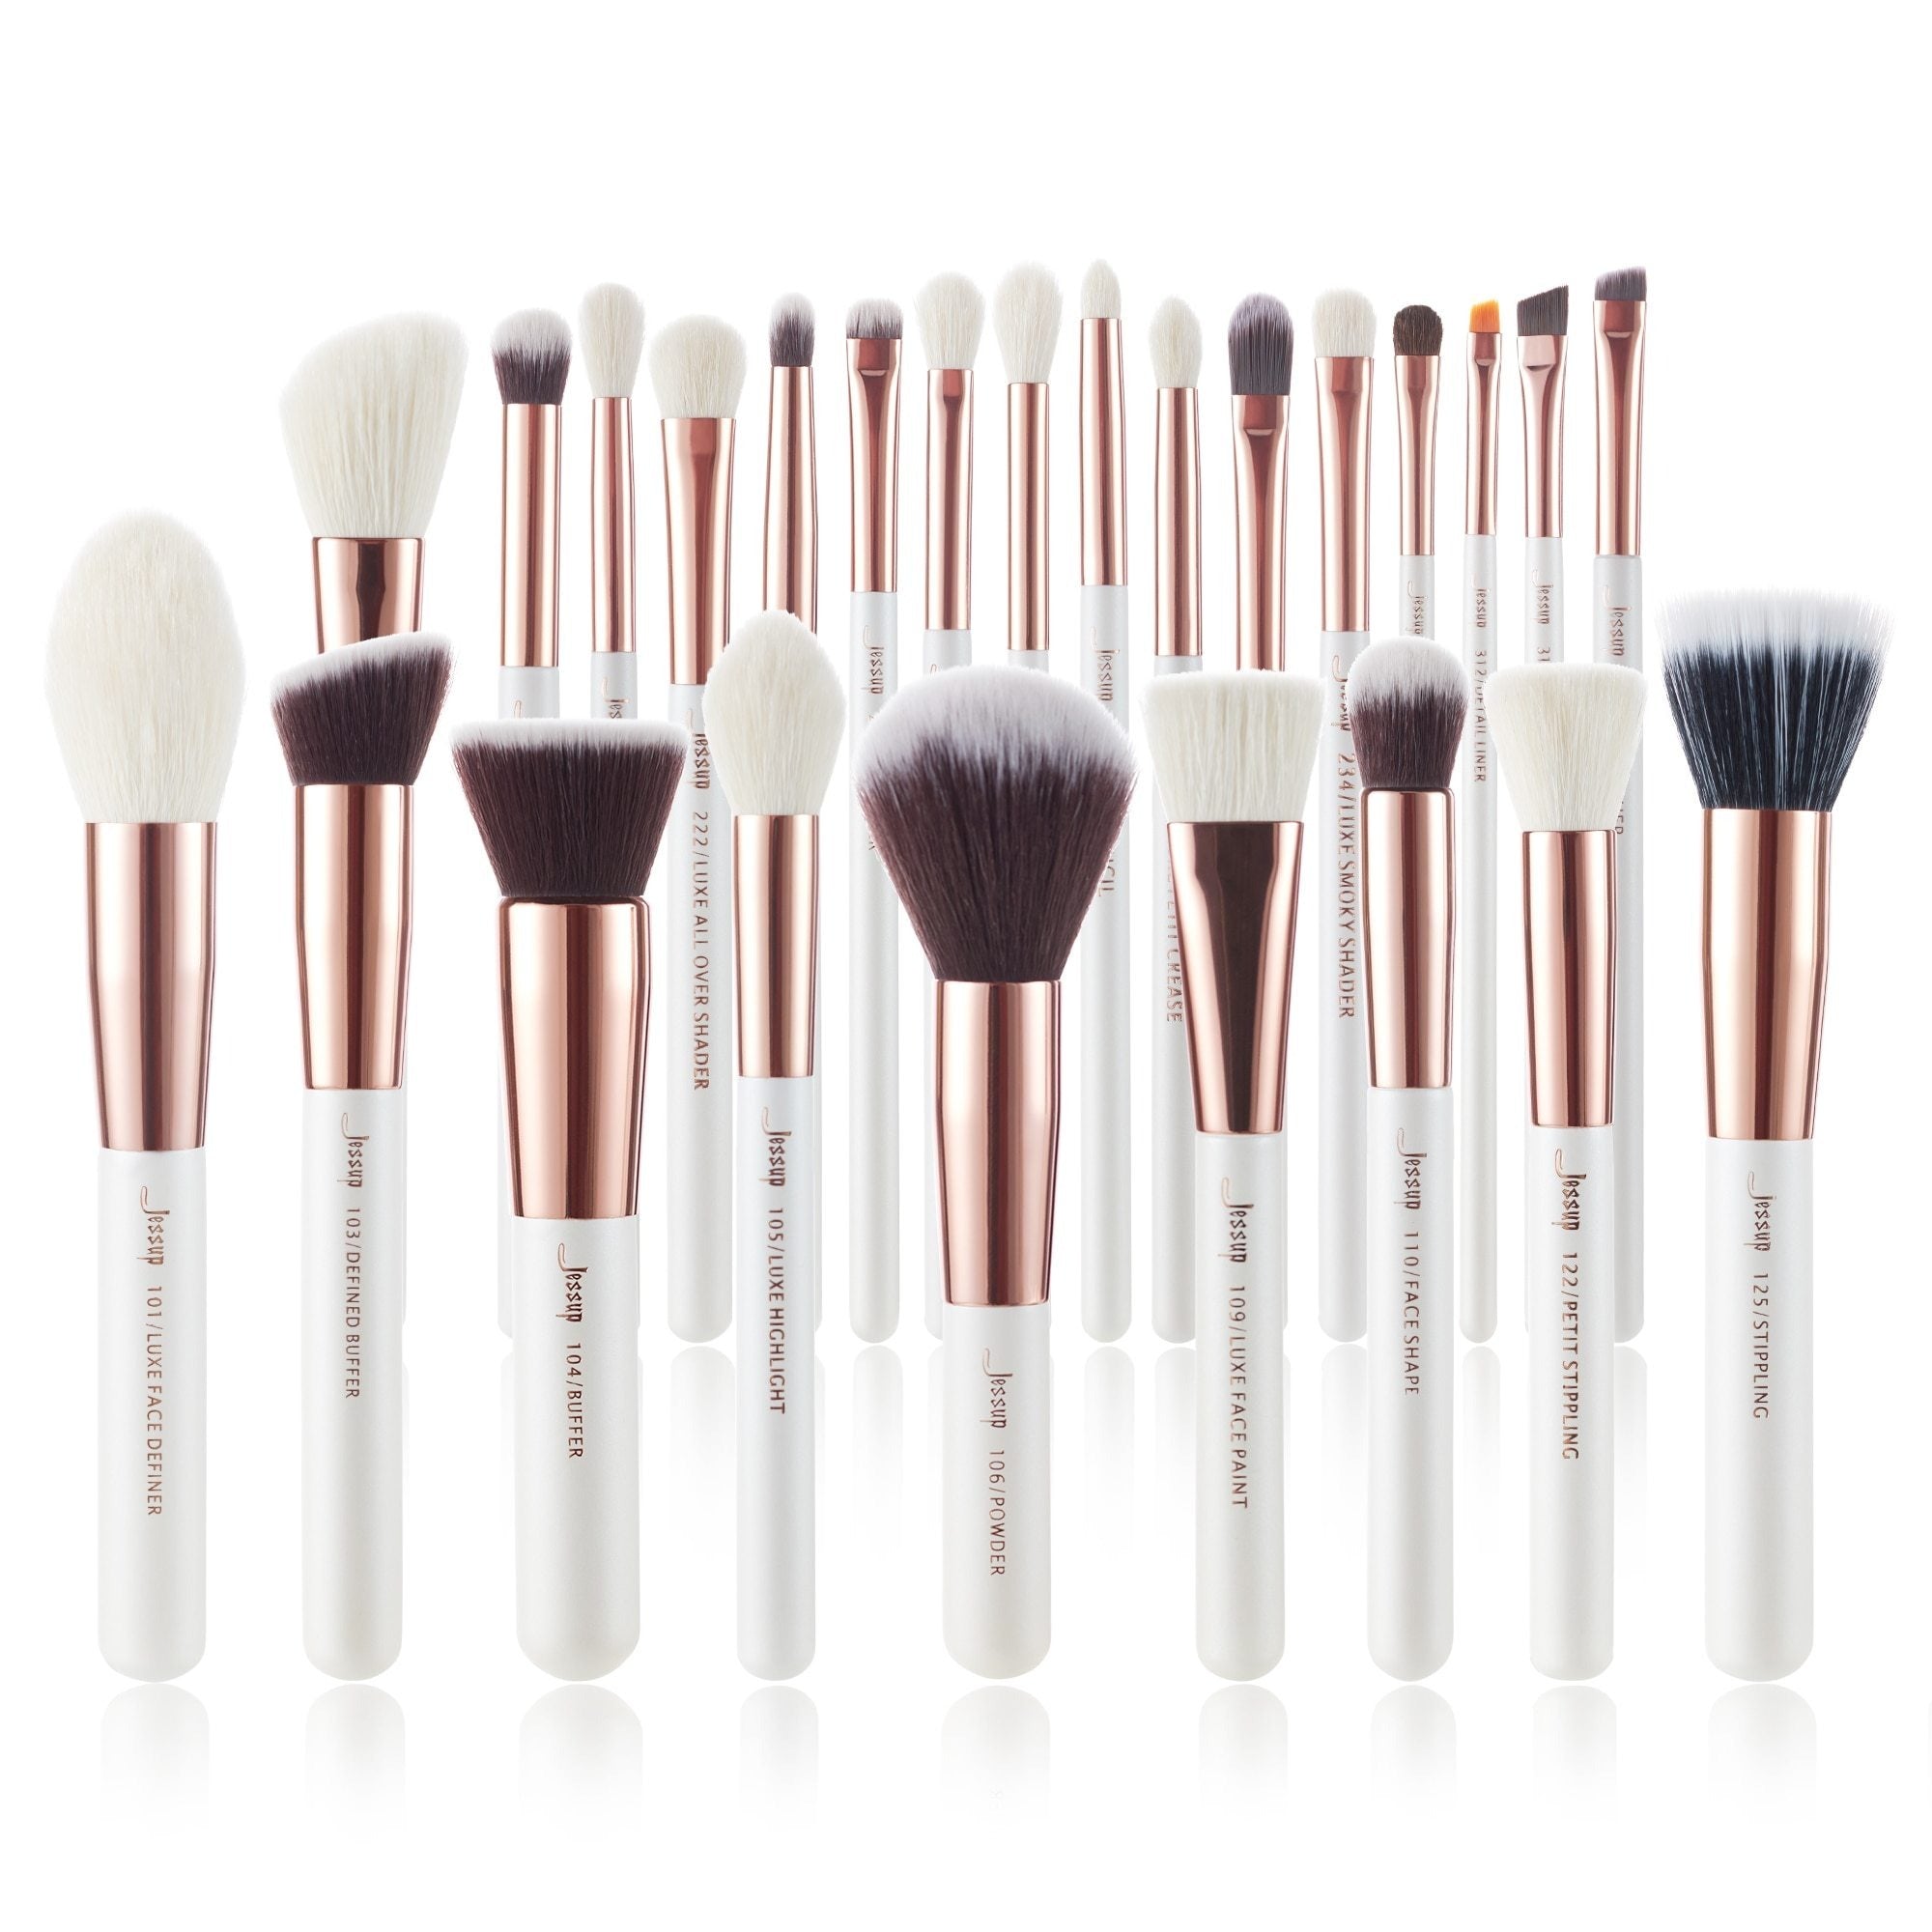 Makeup brushes set 6 25pcs Pearl White / Rose Gold Professional Make up brush Natural hair Foundation Powder Blushes